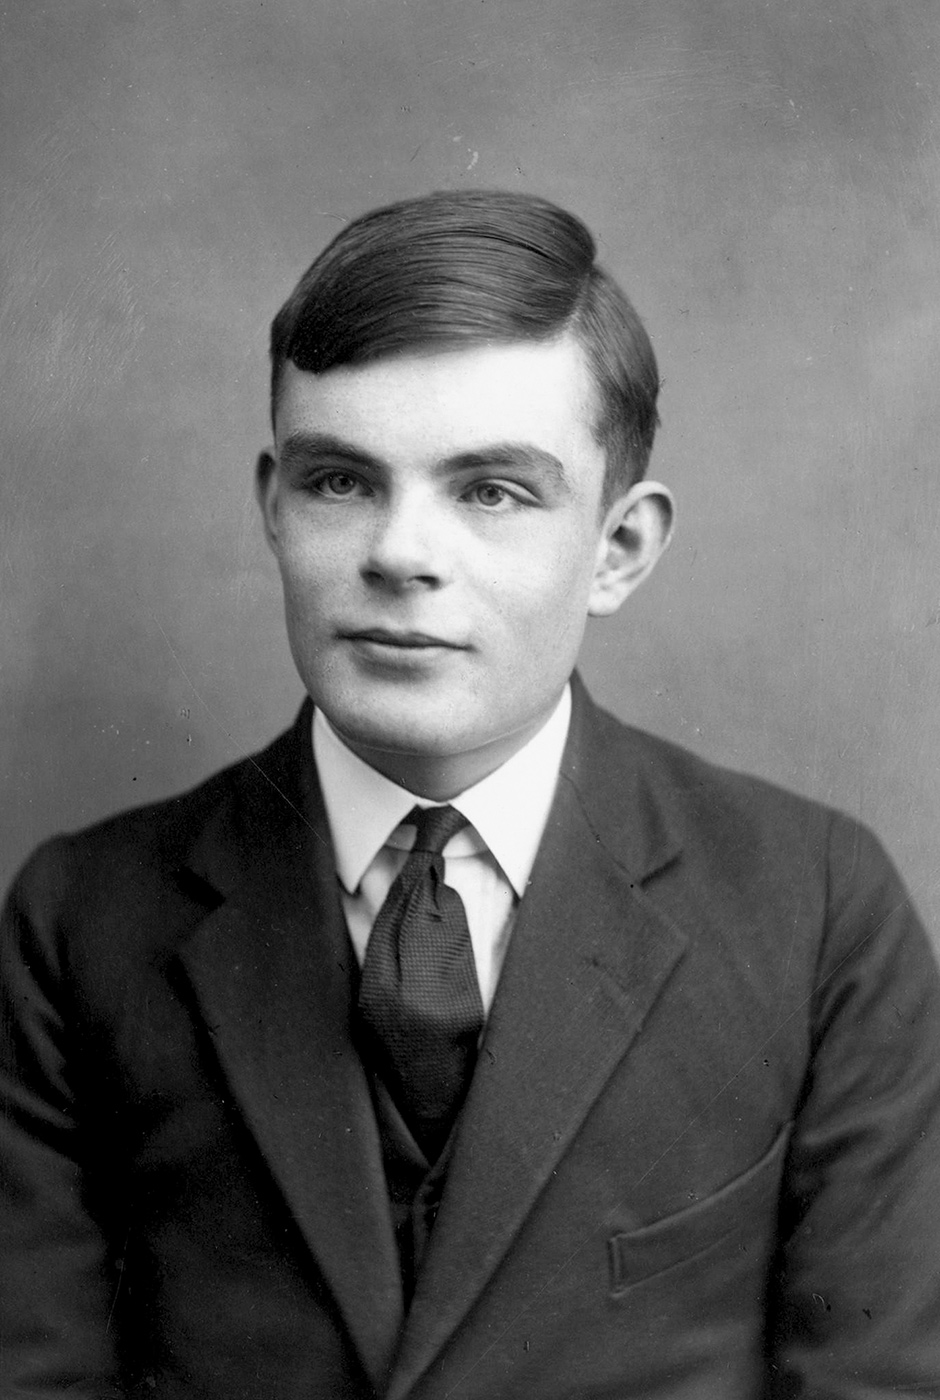 Alan Turing as a young man